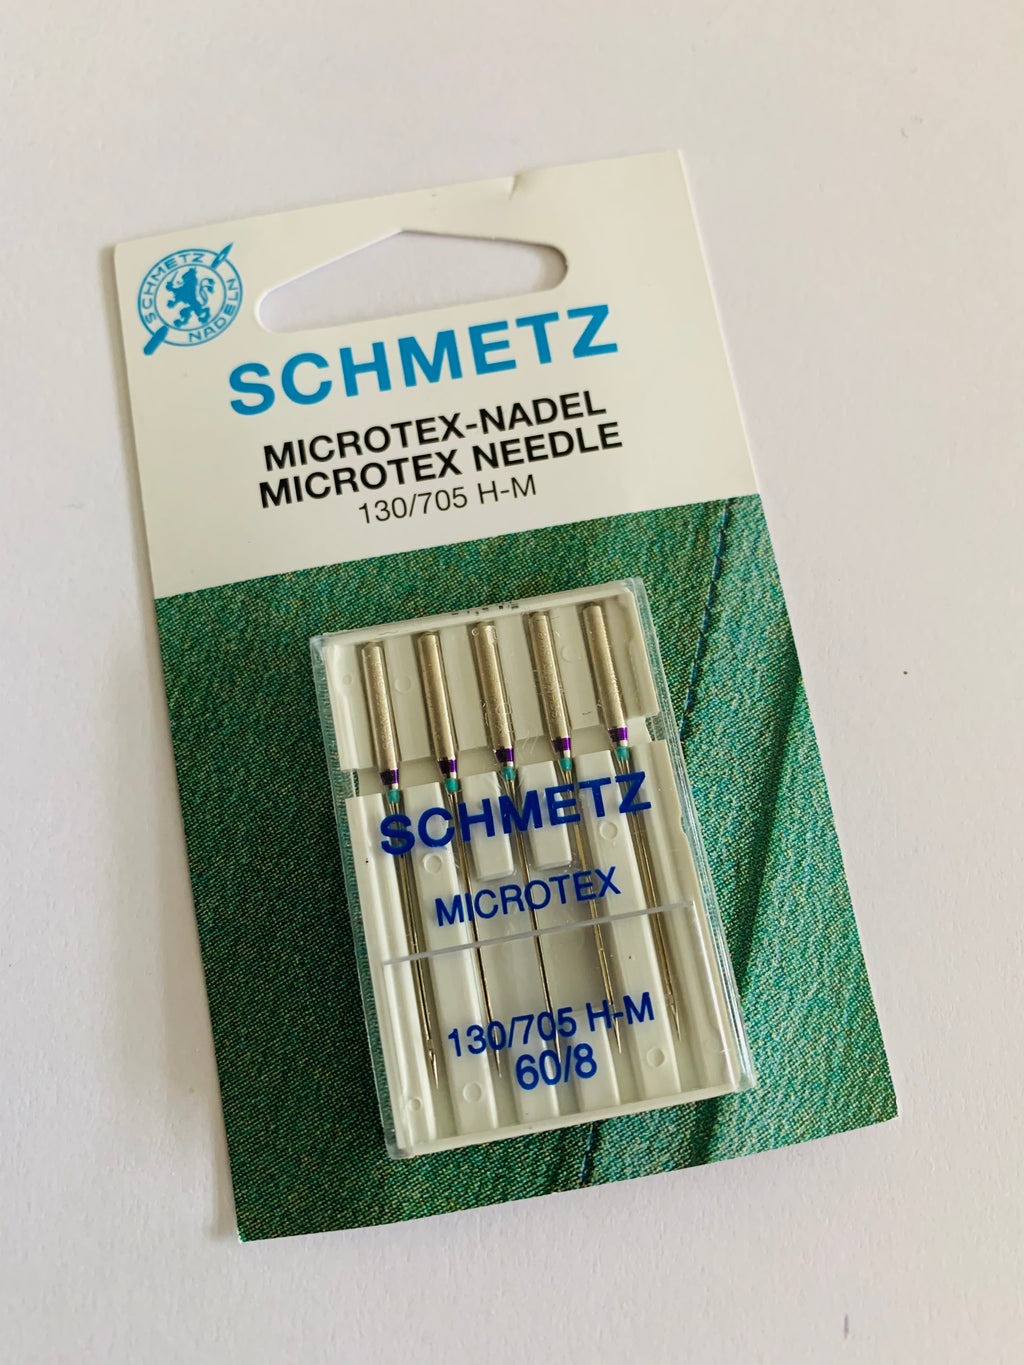 Schmetz sewing machine needles: Microtex 60/8